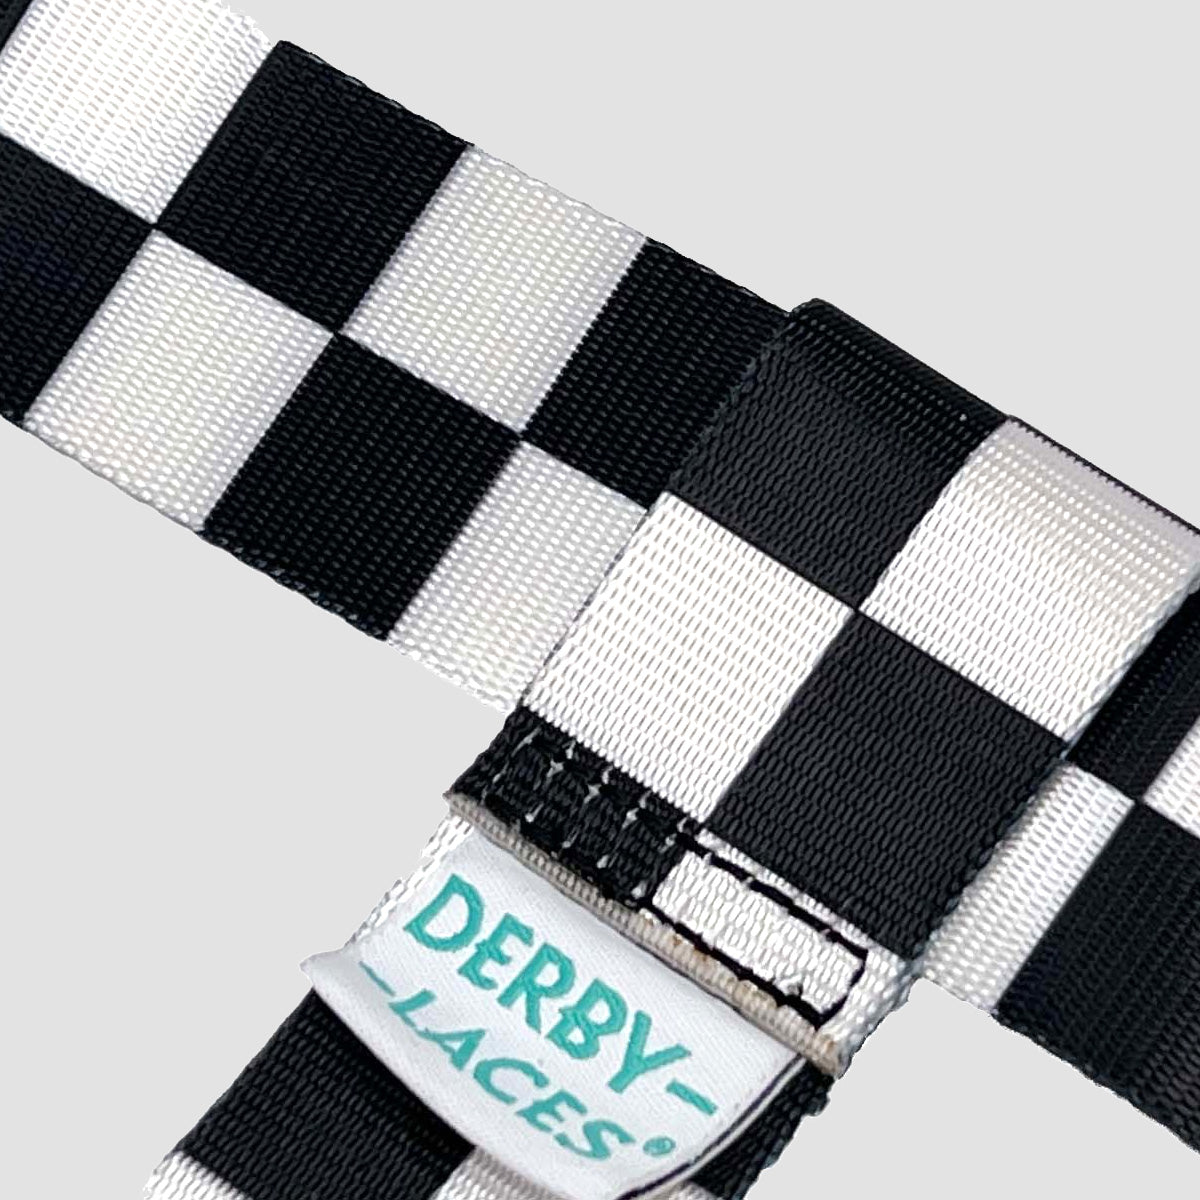 Derby Laces Skate Strap - Gear Leash Checkered Black/White 198cm